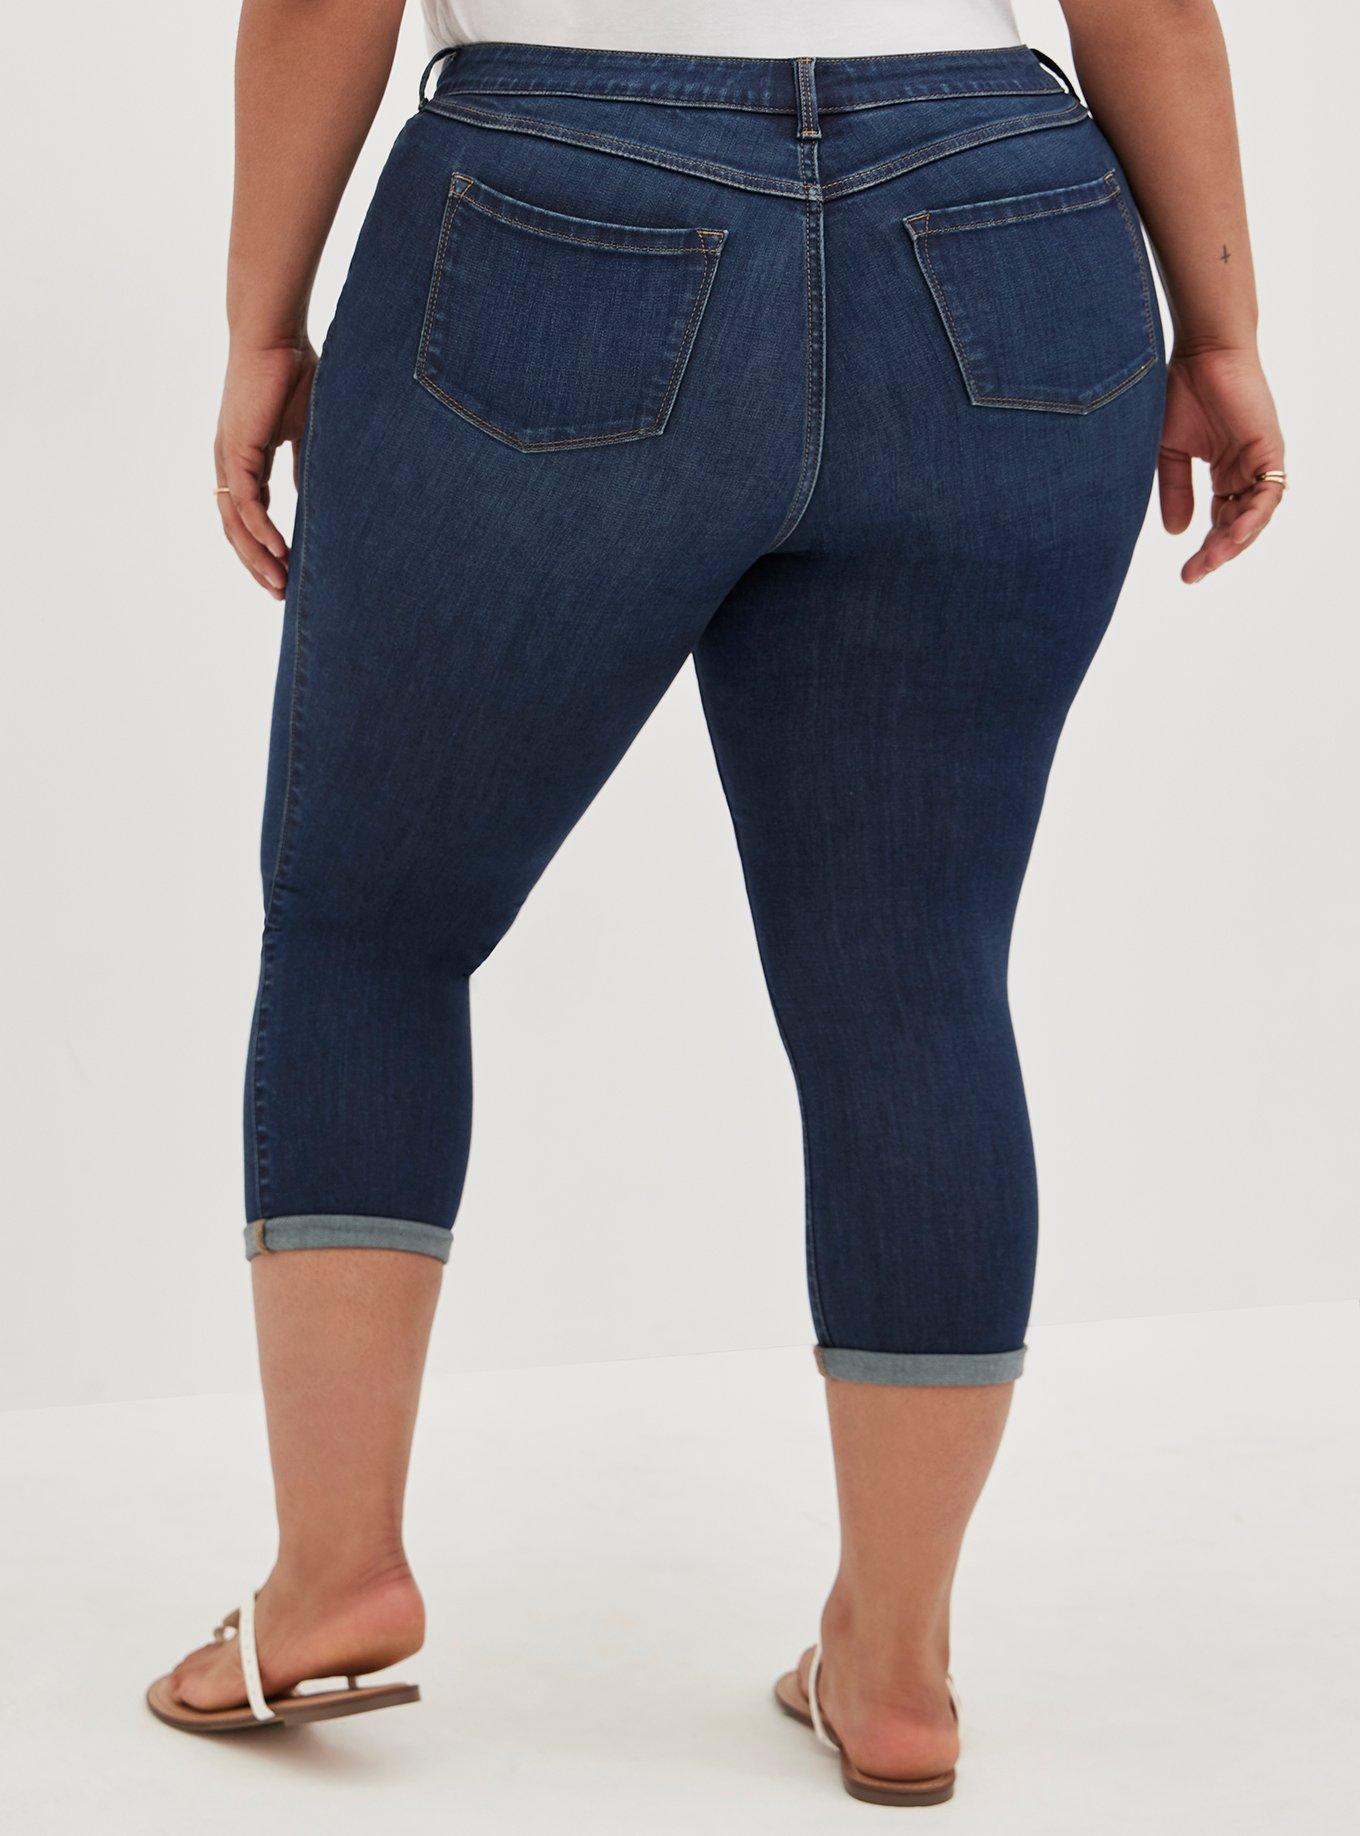 Torrid MidFit Jean Super Skinny - Size Soft Plus - Crop Mid-Rise